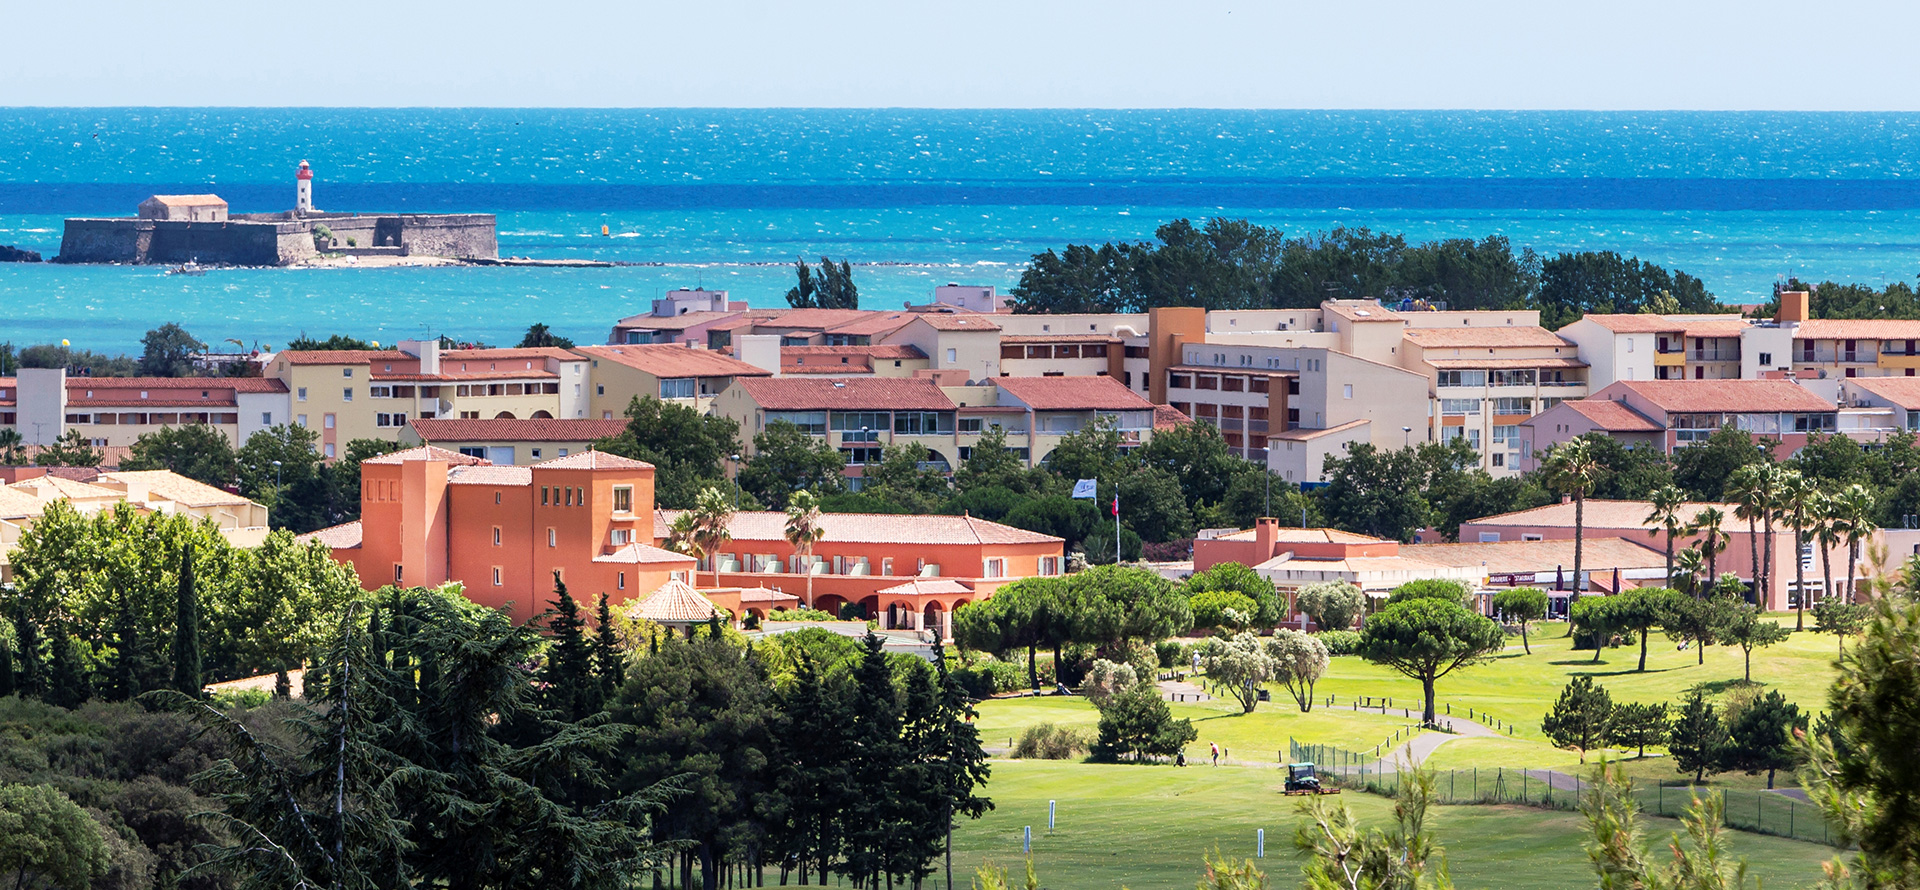 Vista general del hotel Palmyra Golf 4 estrellas colindante al Golf Internacional de Cap d'Agde